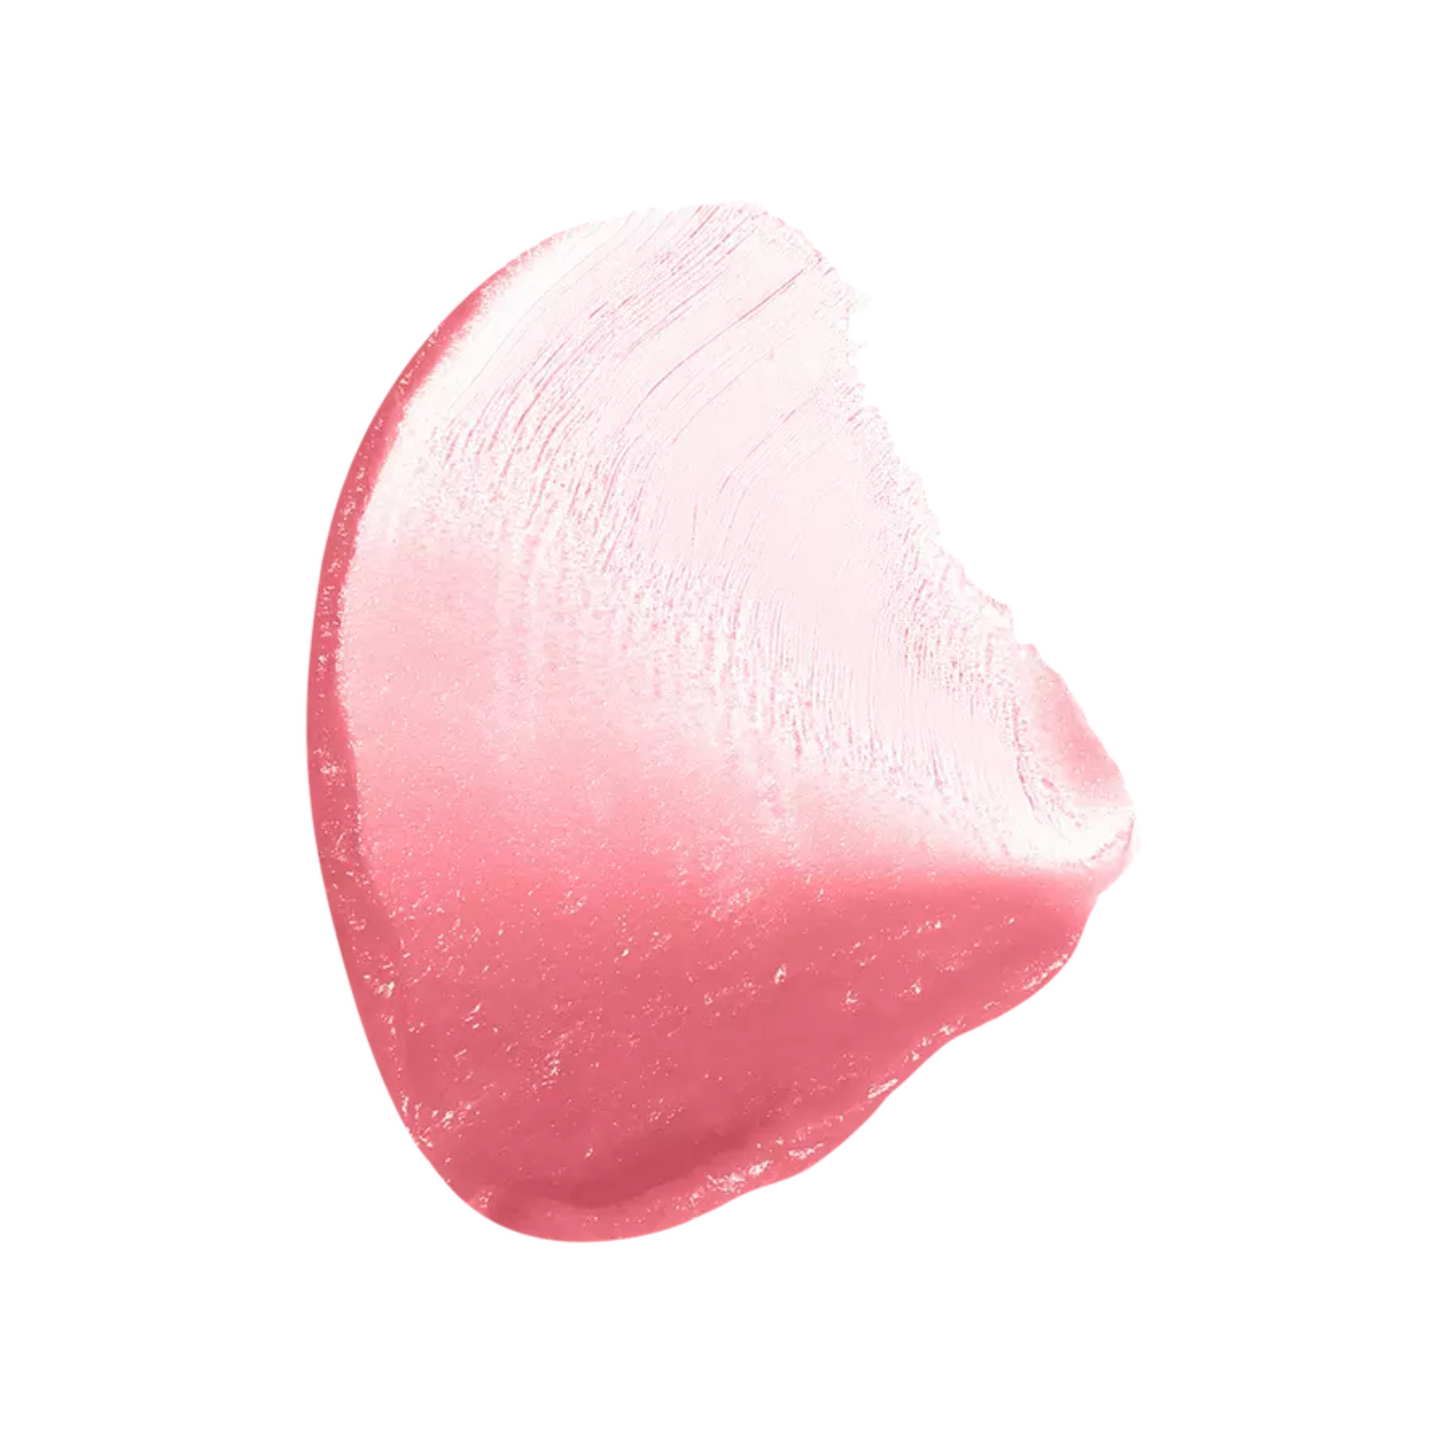 Honest - Gloss-C Lip Gloss - Pink Agate